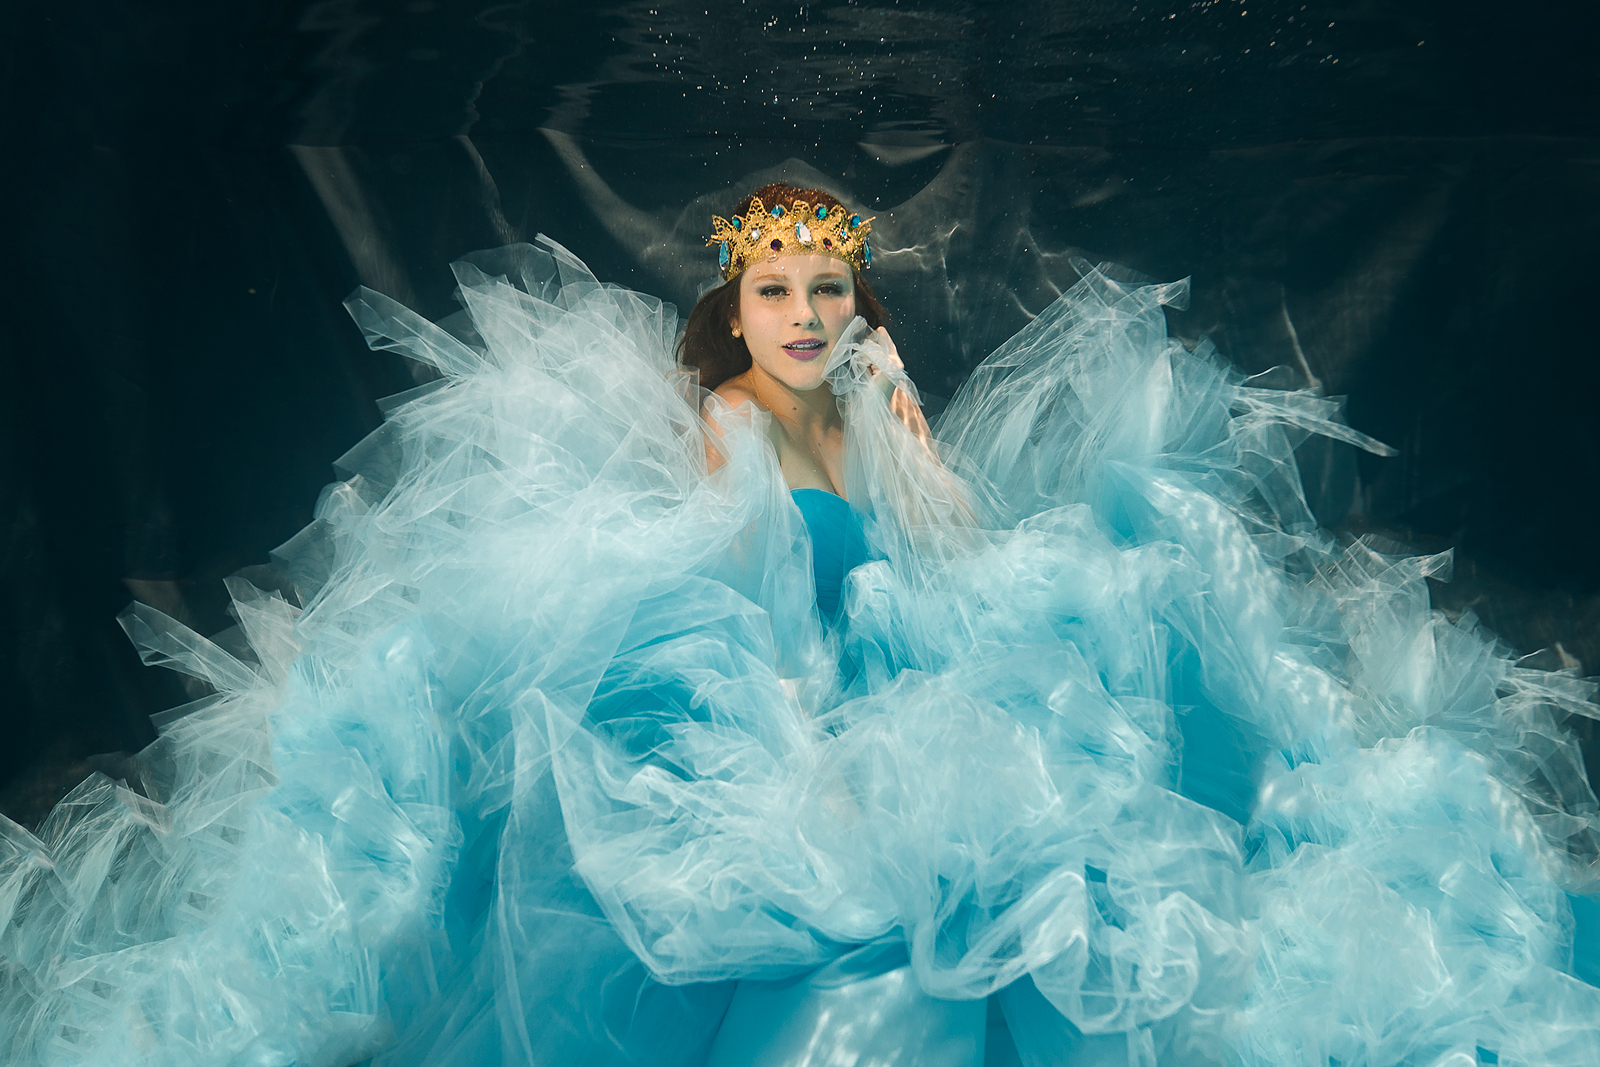 marcosvaldés|FOTÓGRAFO® underwater portrait photographer